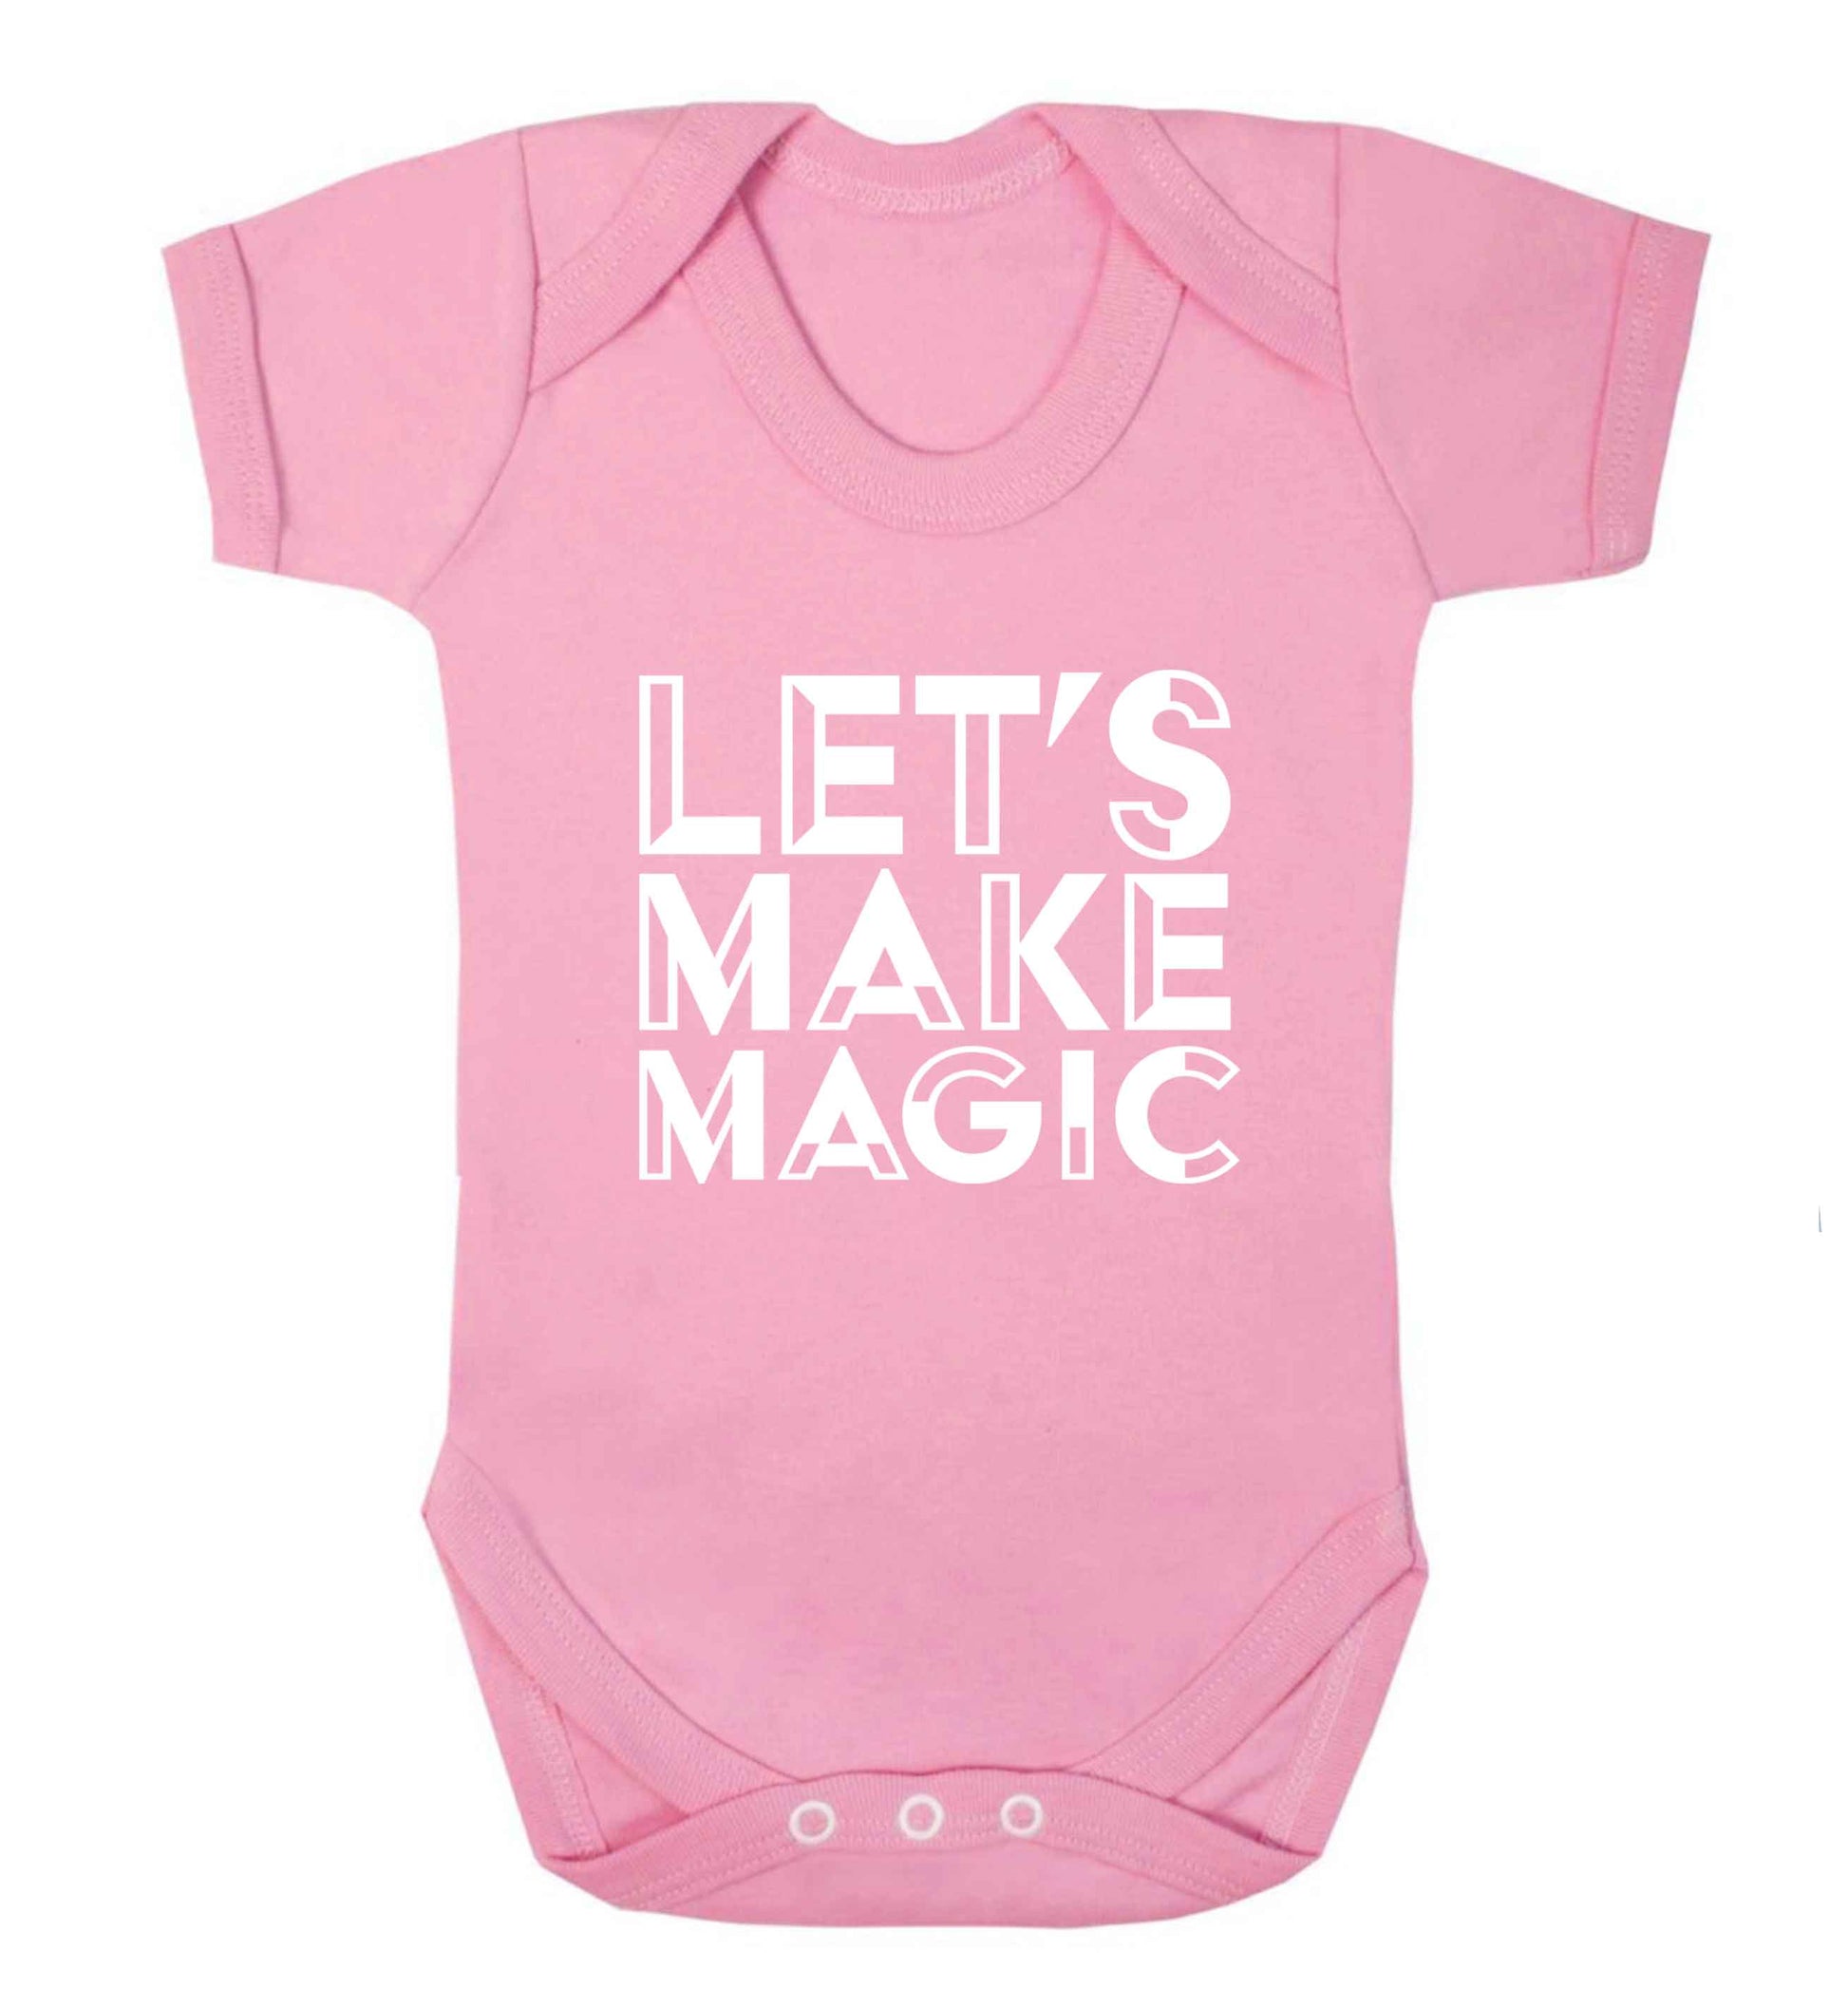 Let's make magic baby vest pale pink 18-24 months